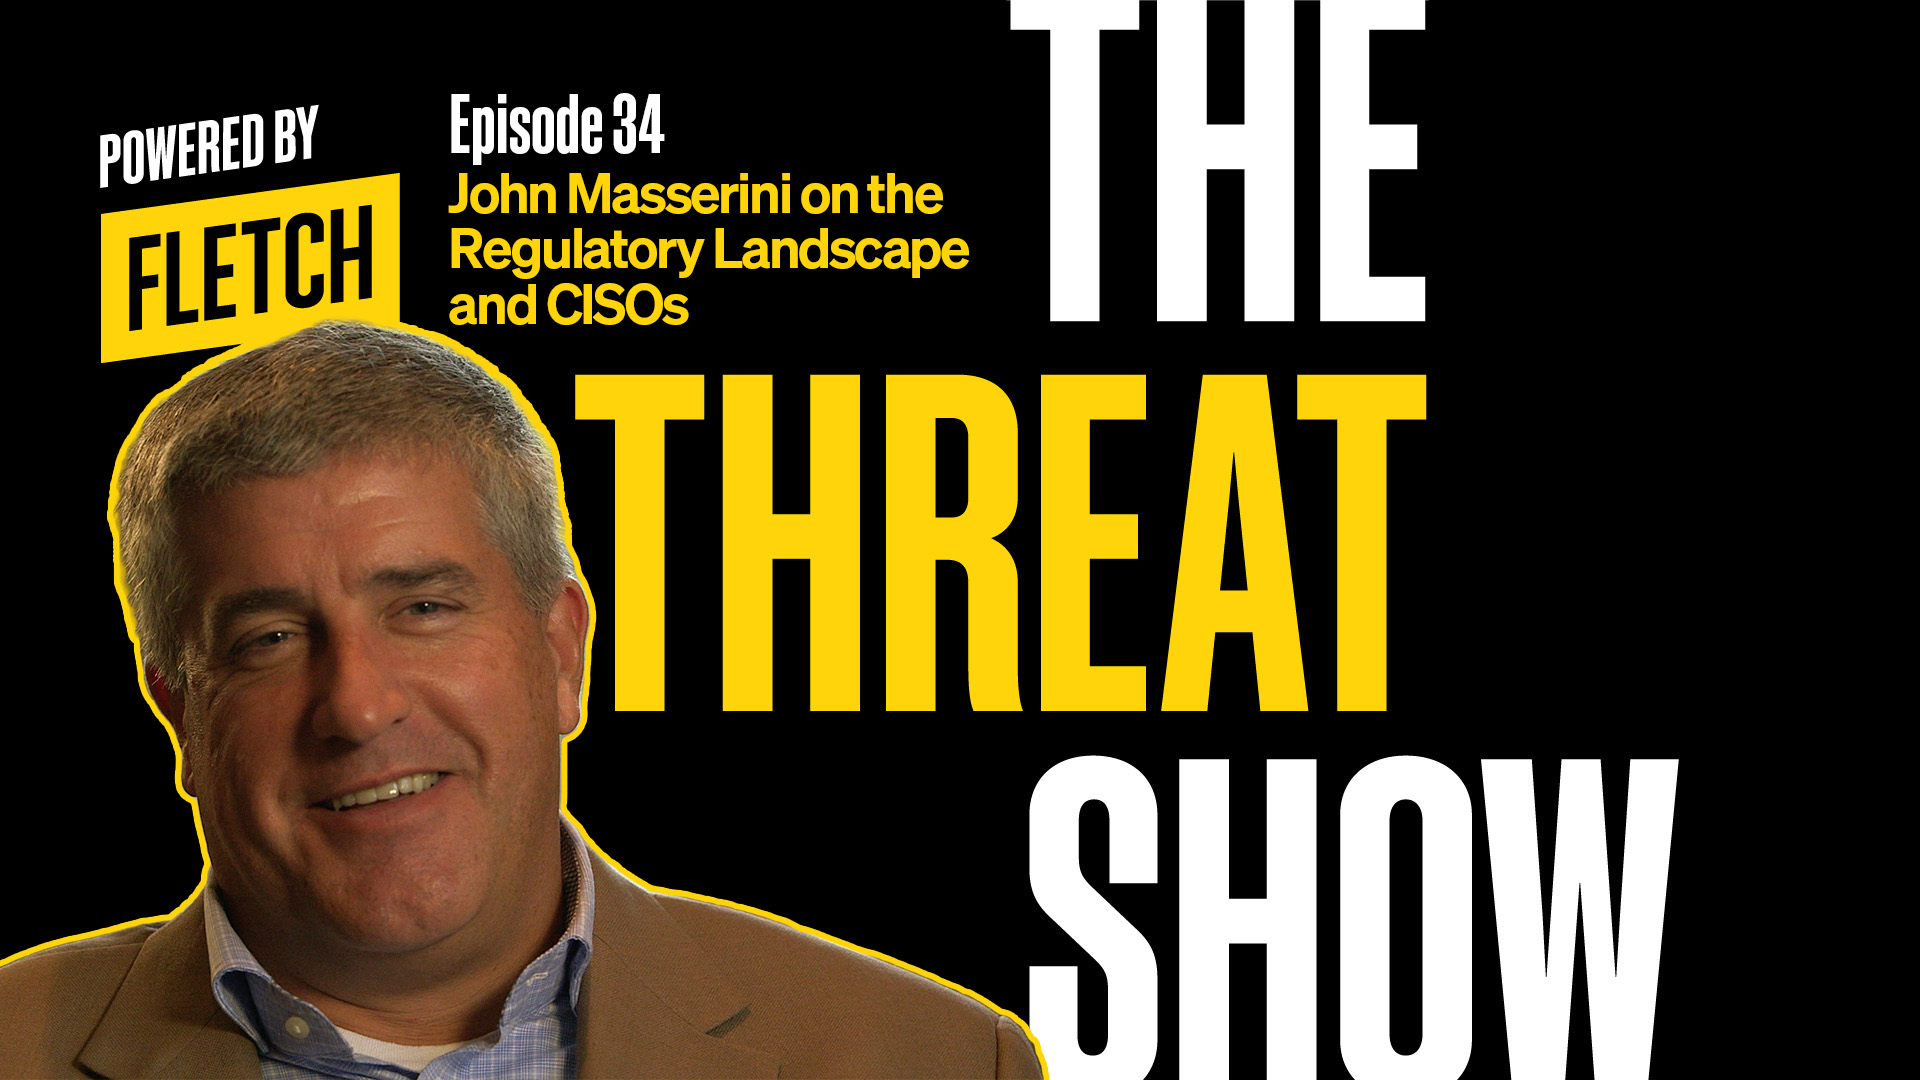 The Threat Show Ep. 34 w/ John Masserini